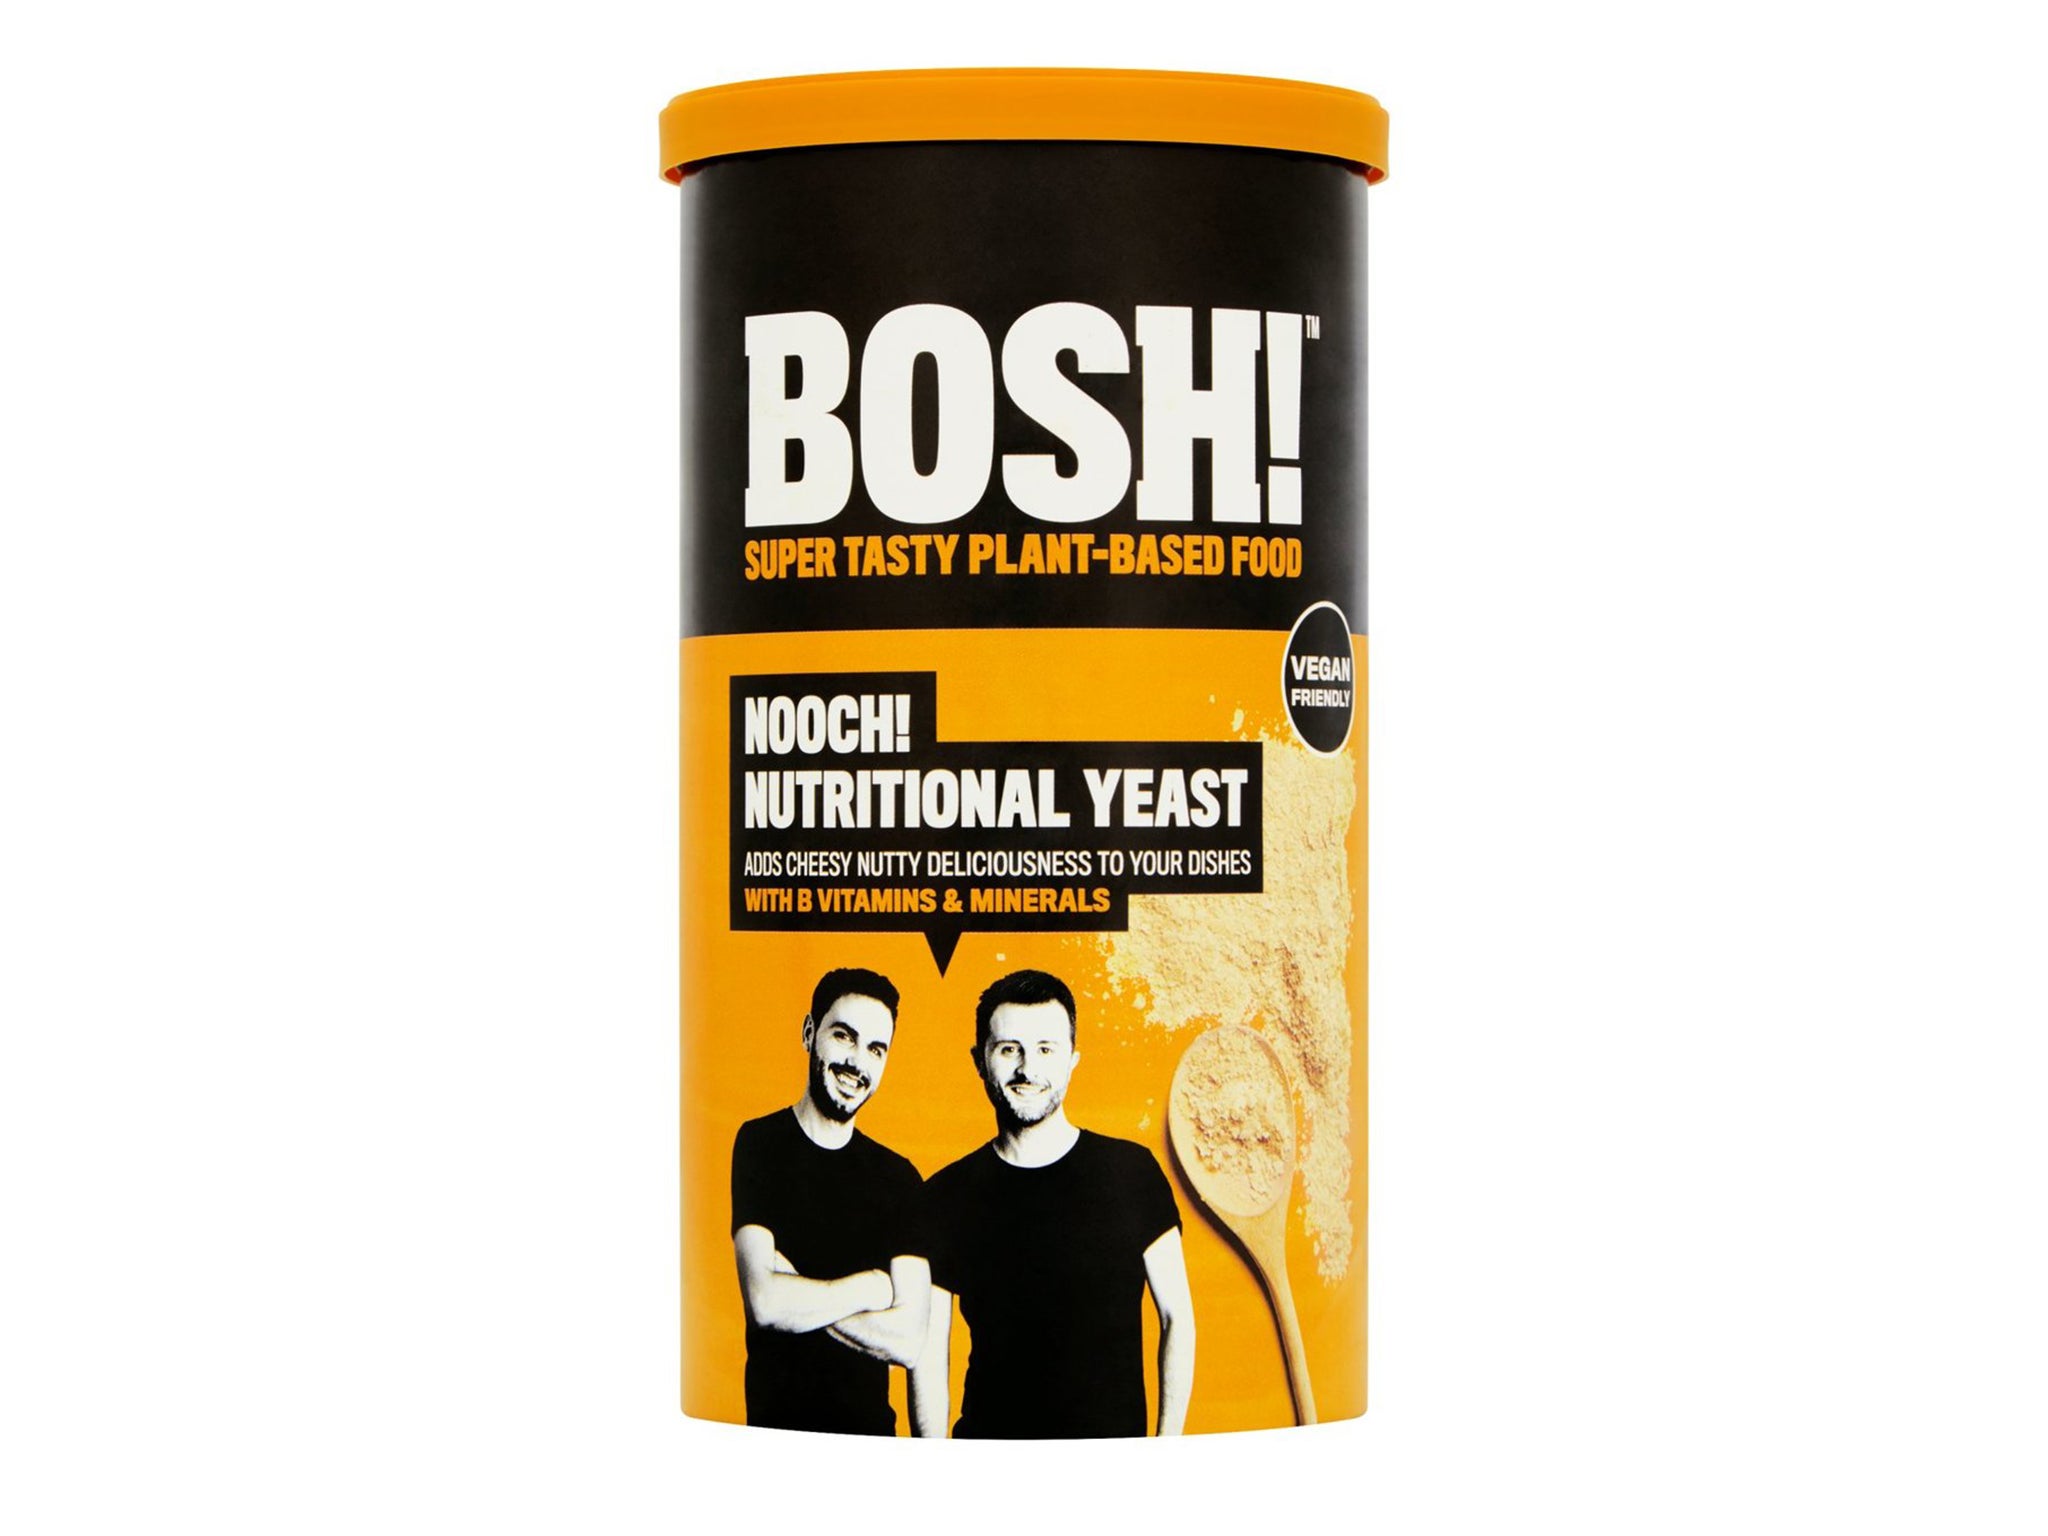 bosh nutritional yeast indybest.jpeg